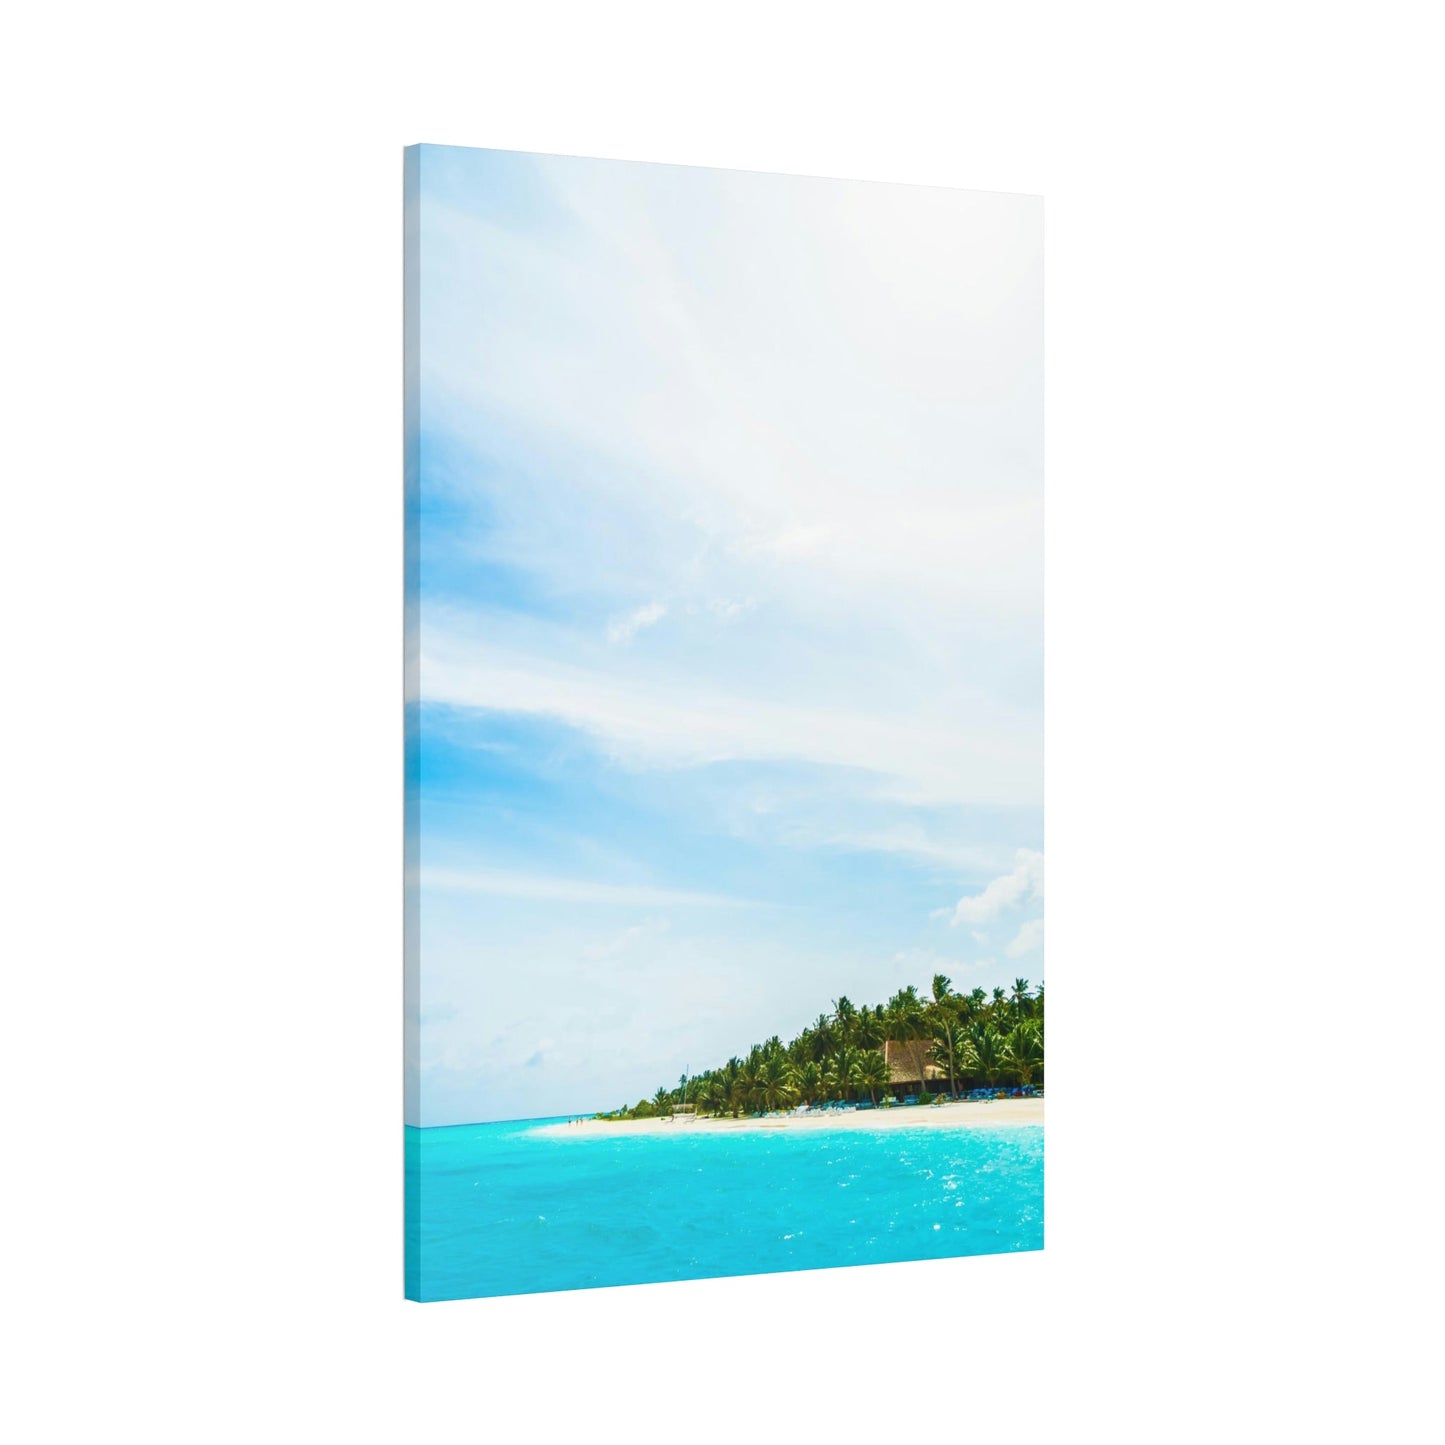 Paradise Found: Framed Canvas of a Scenic Island Beach on a Sunset